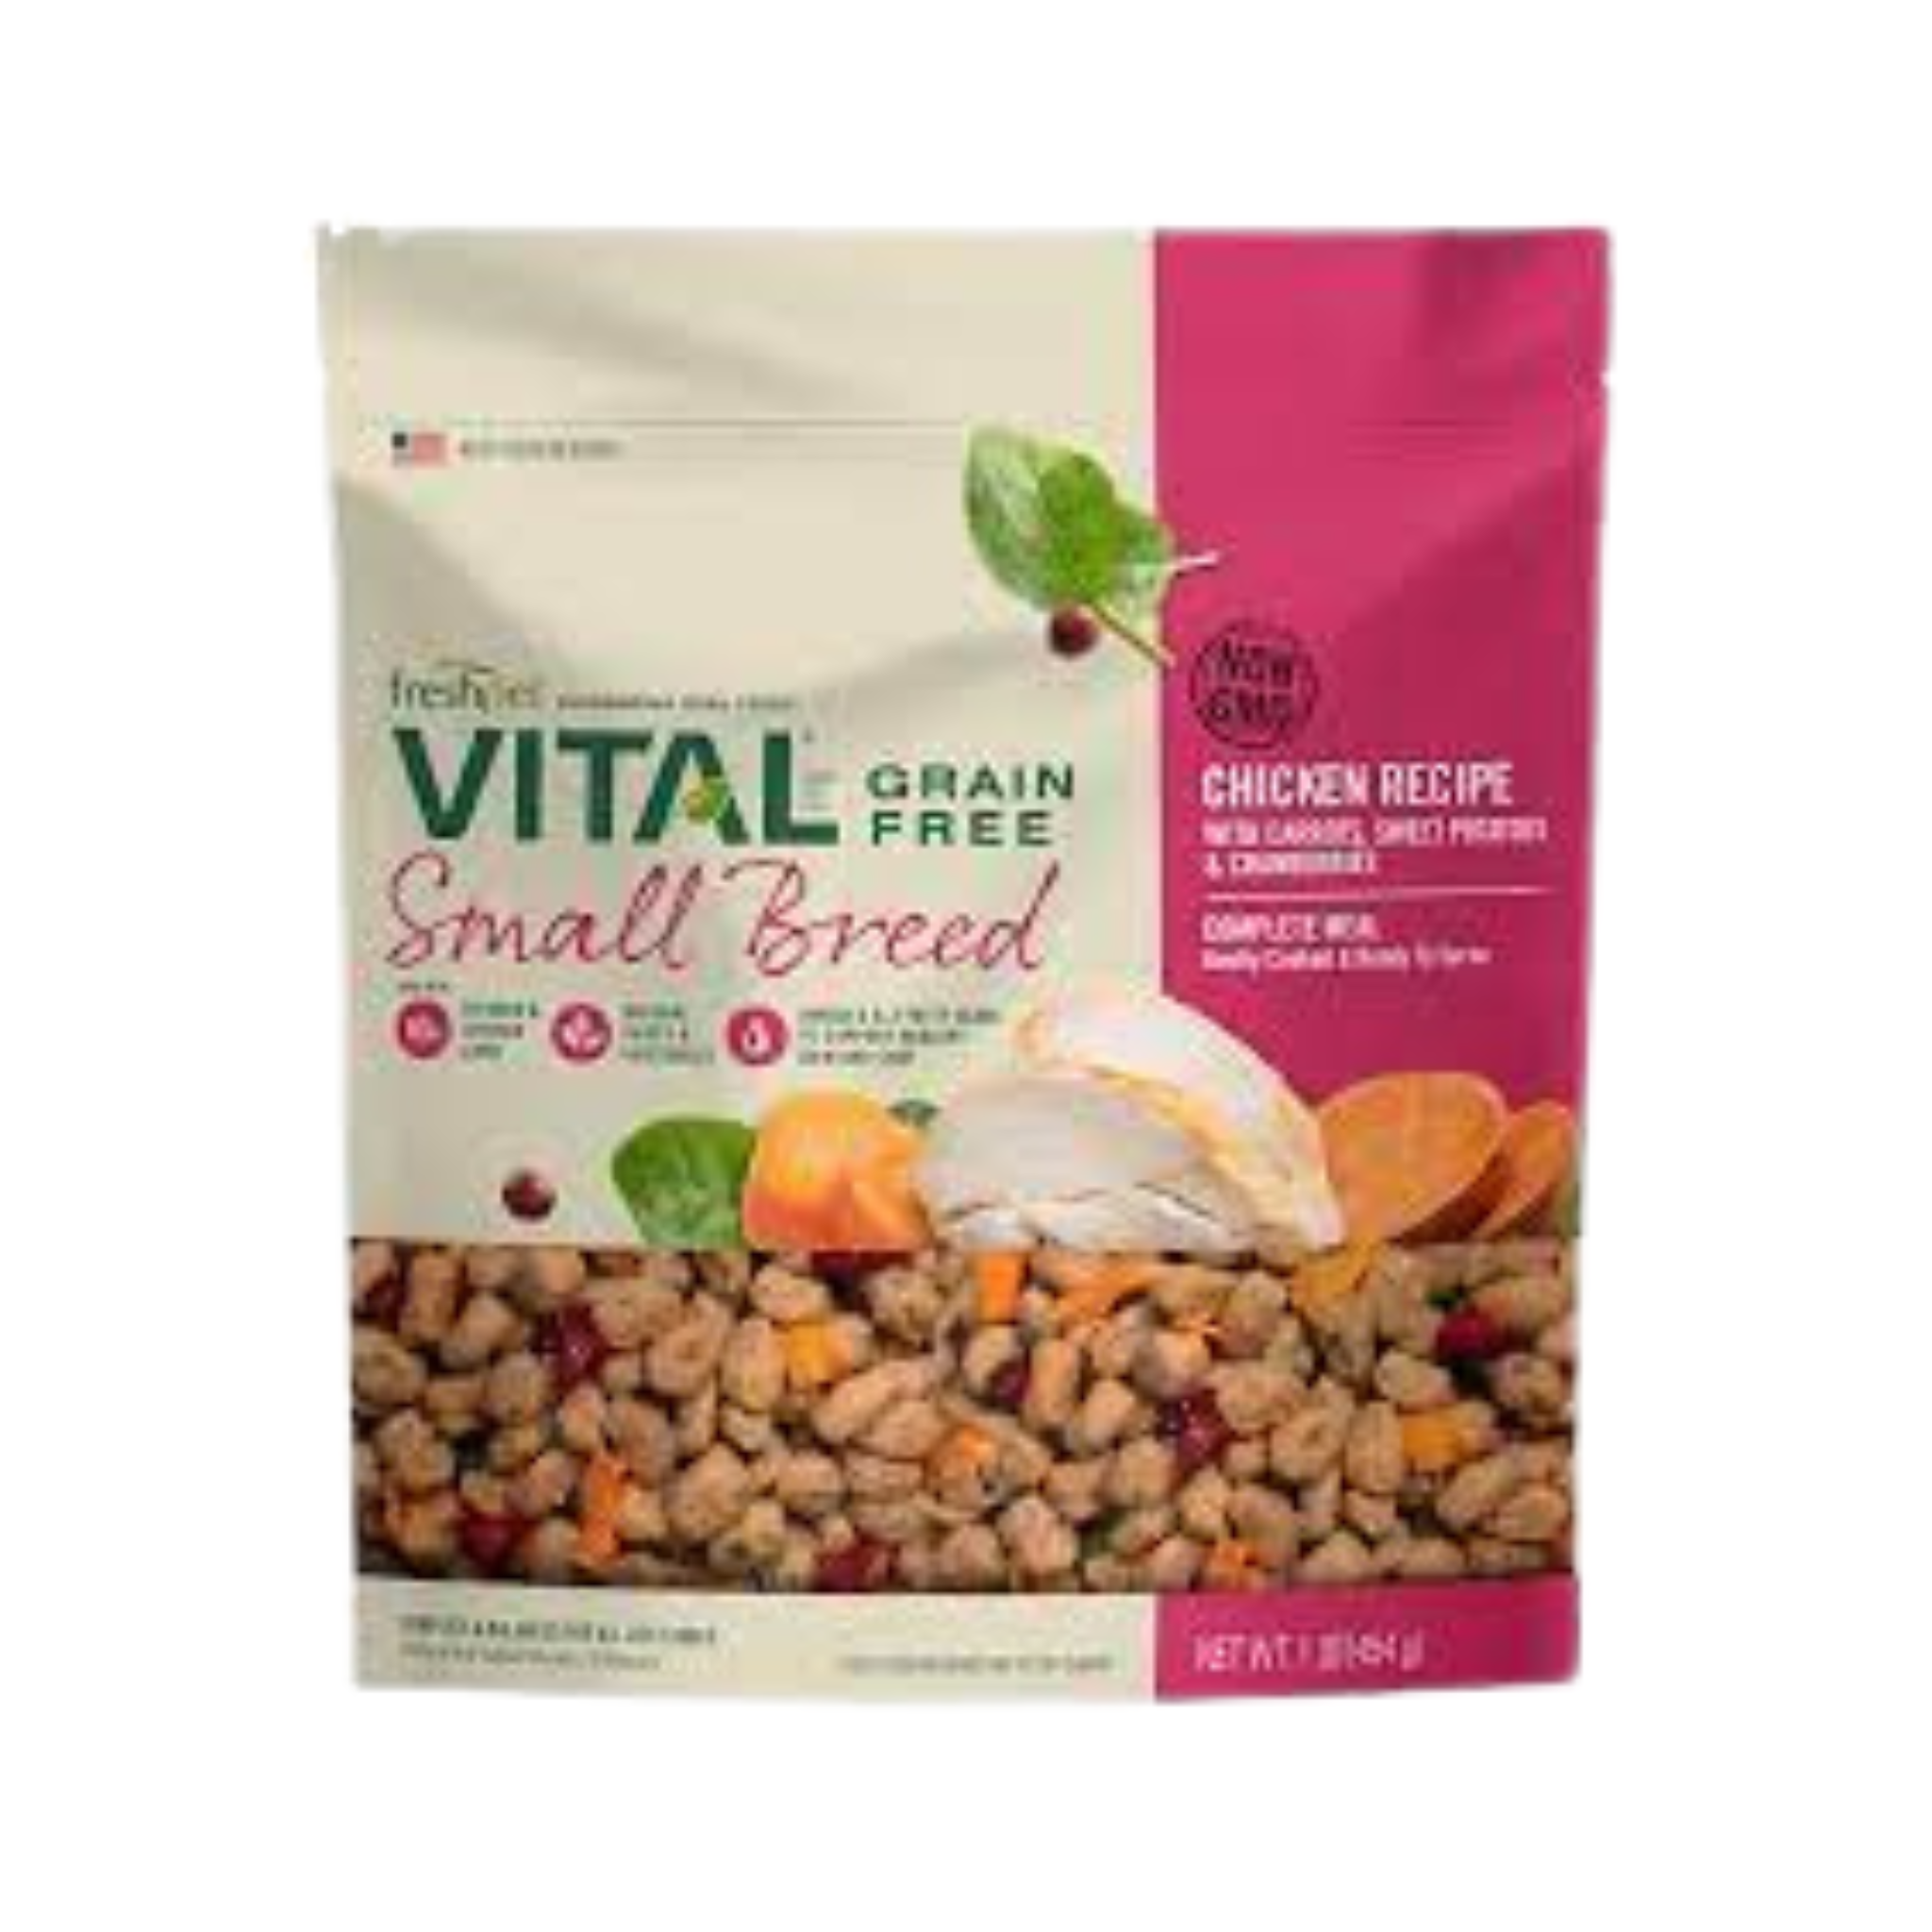 Freshpet Vital Grain Free Small Breed